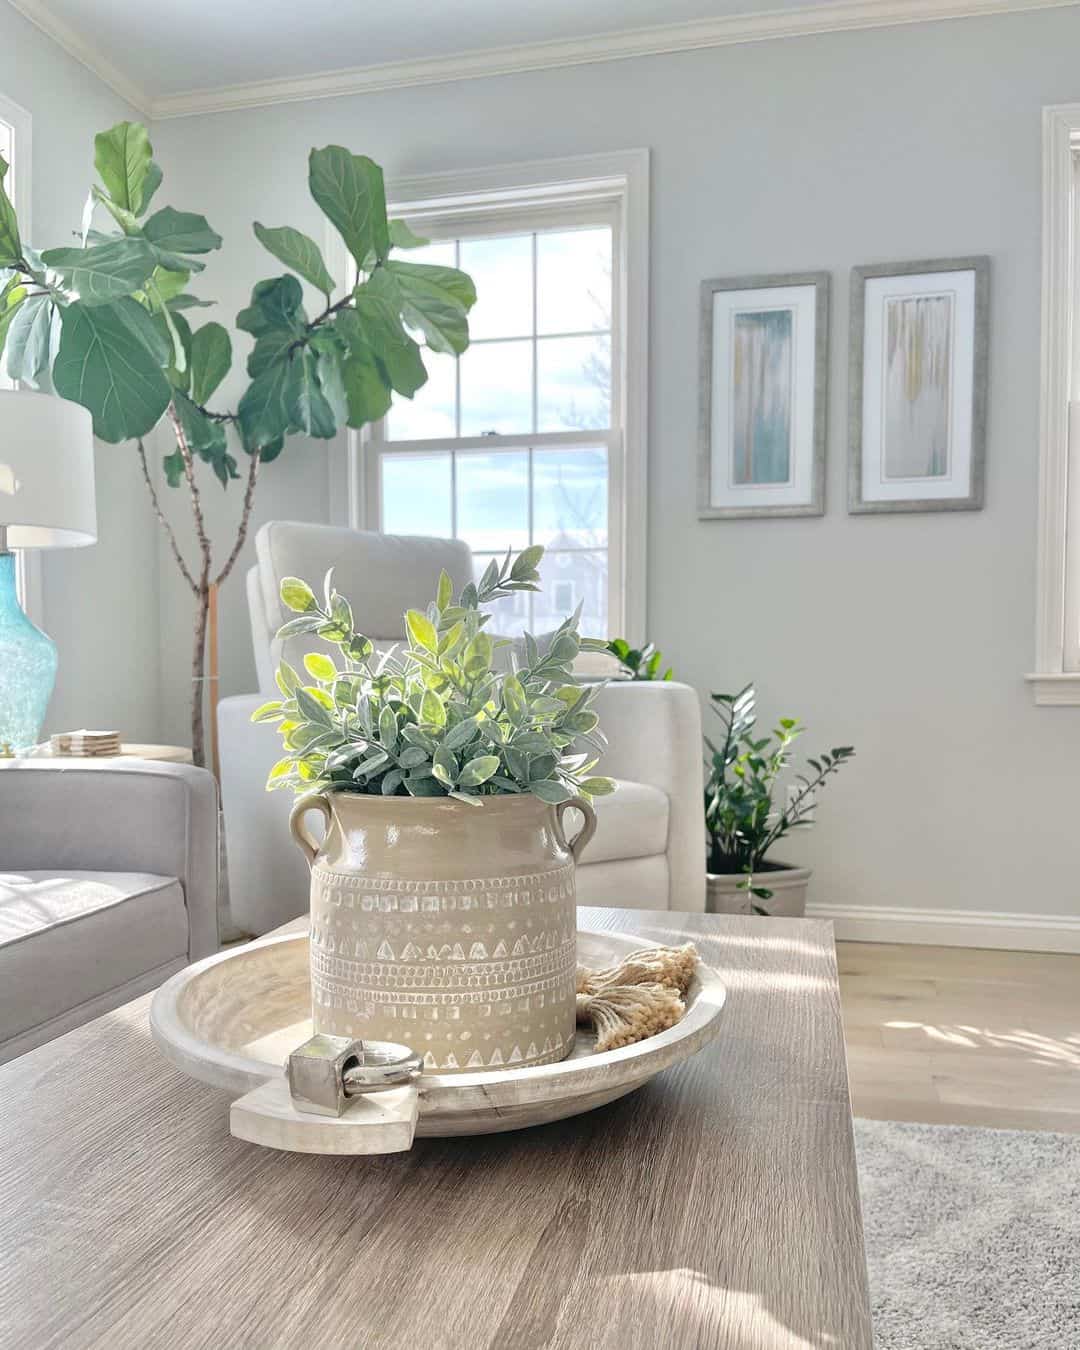 Lush Greenery: Living Room with Abundant Plants